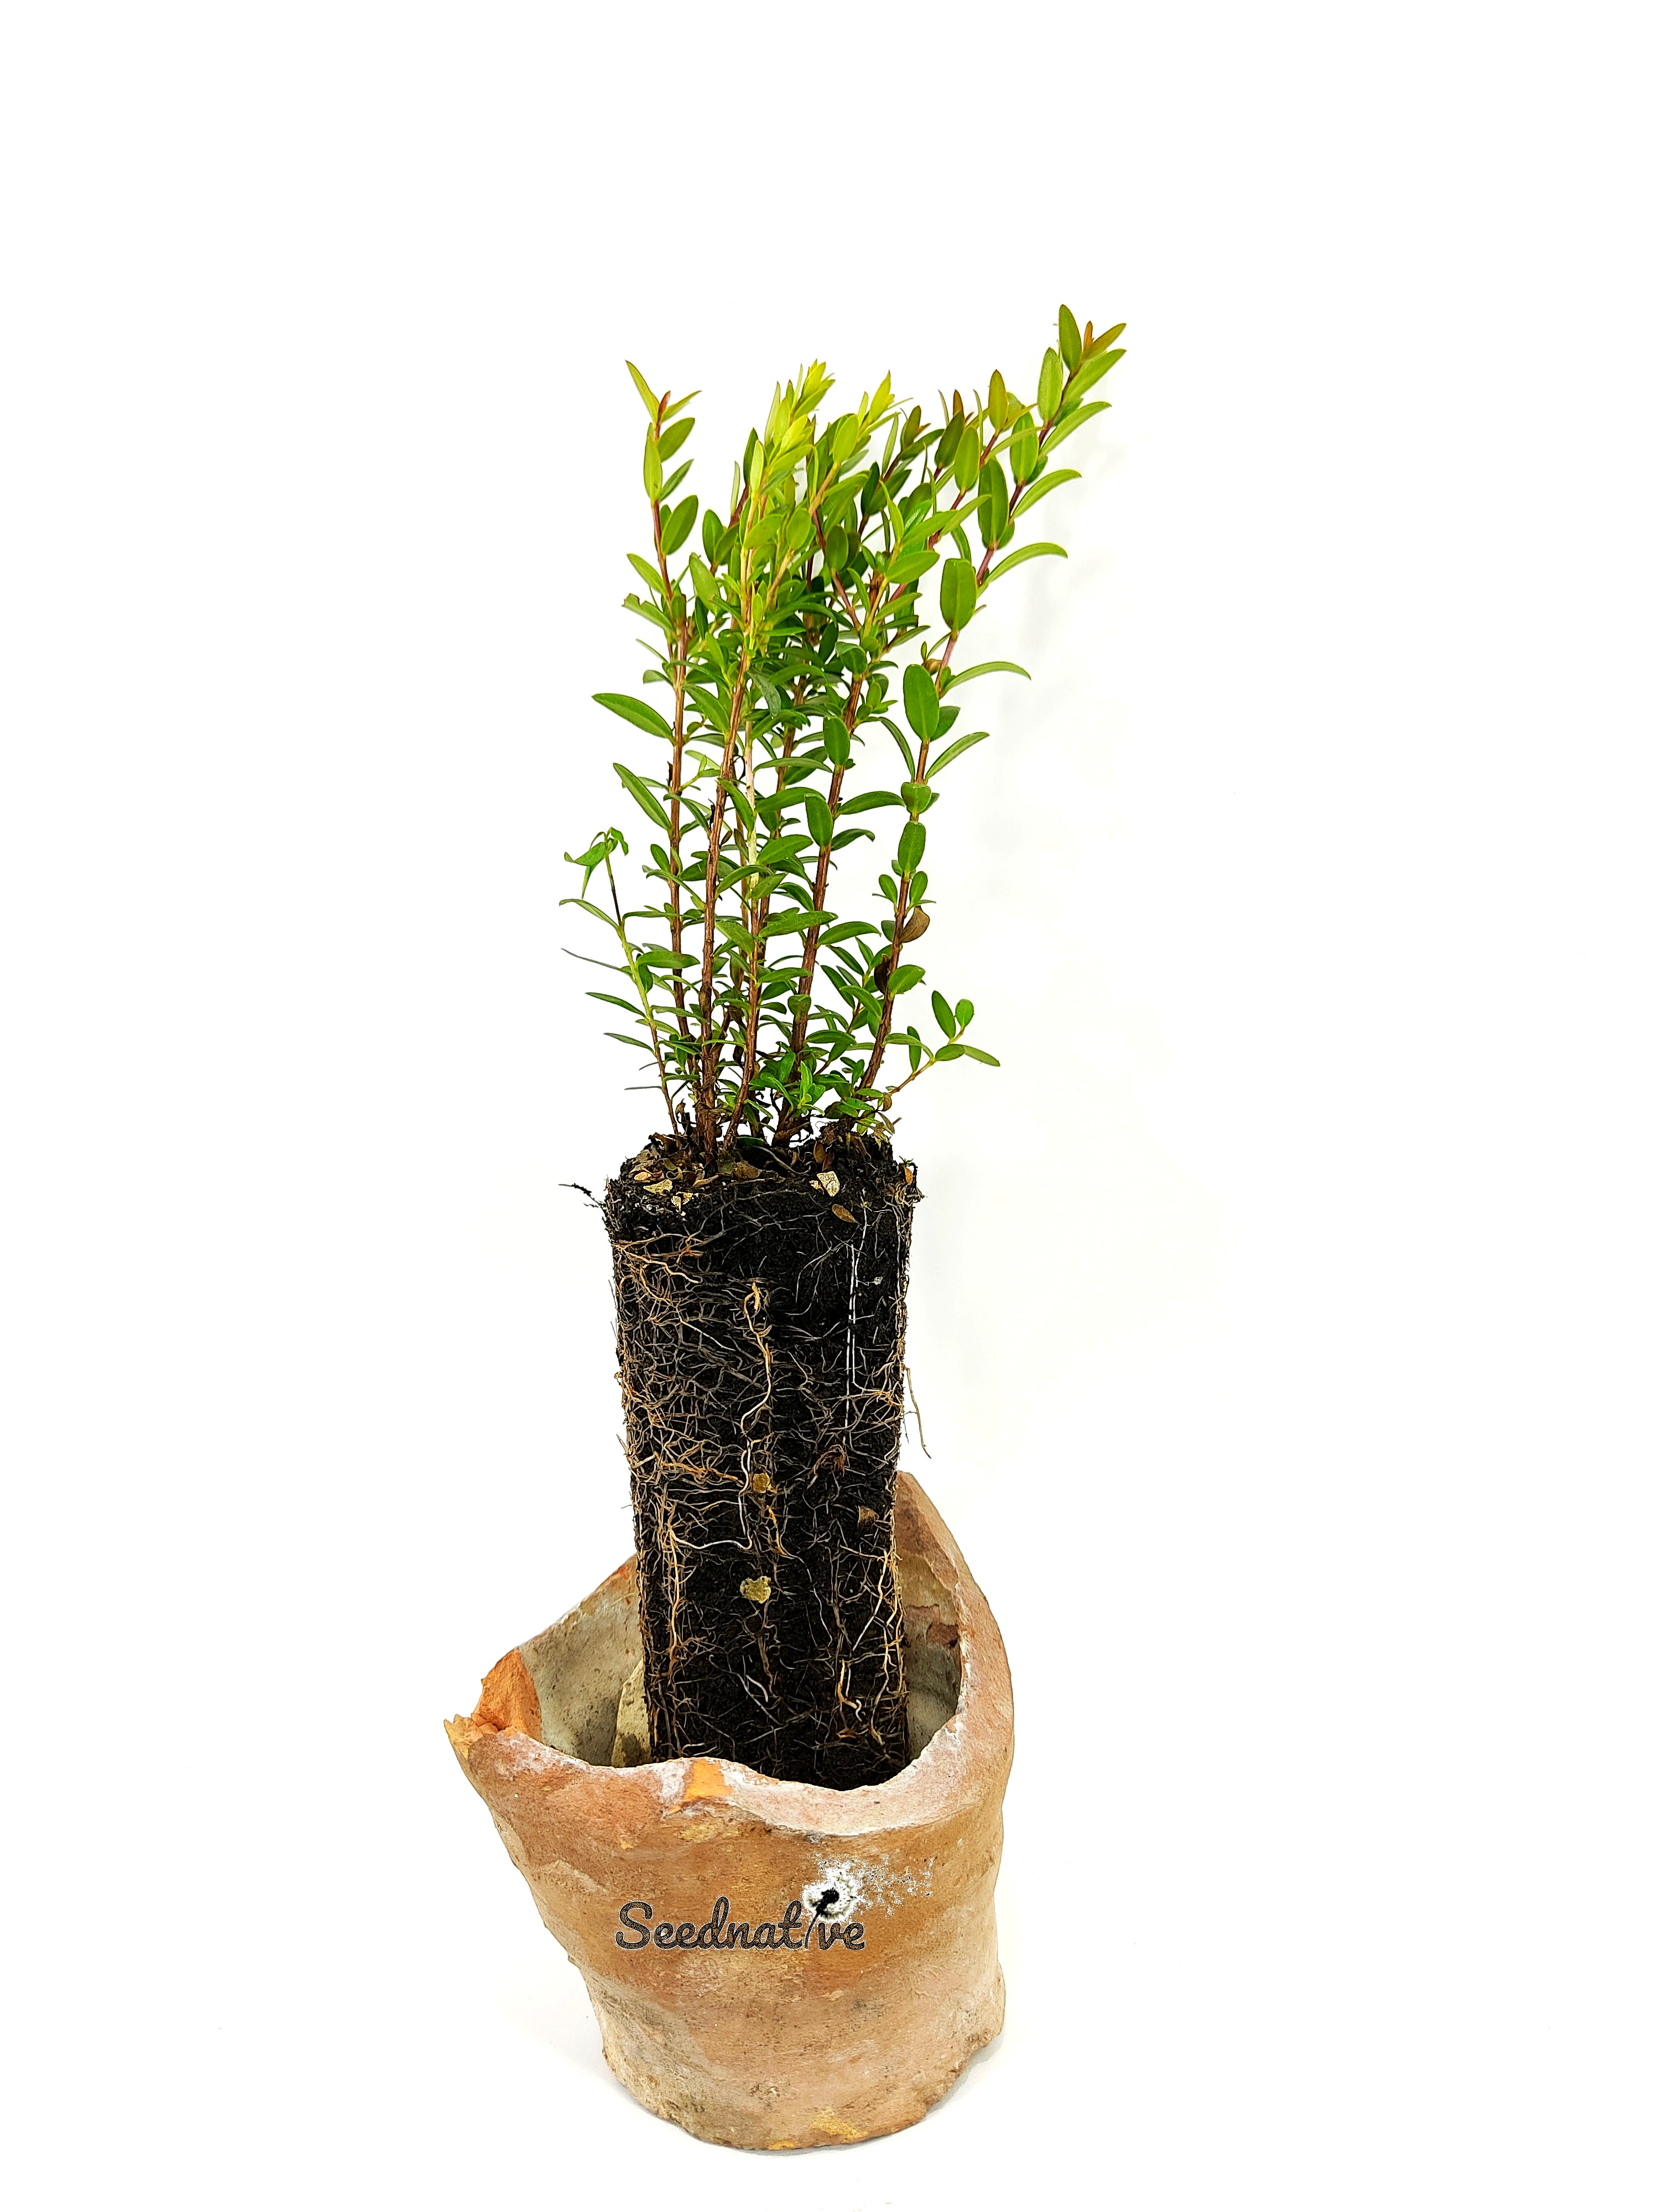 Planta de Mirto - Myrtus communis tarentina - 2 Años 